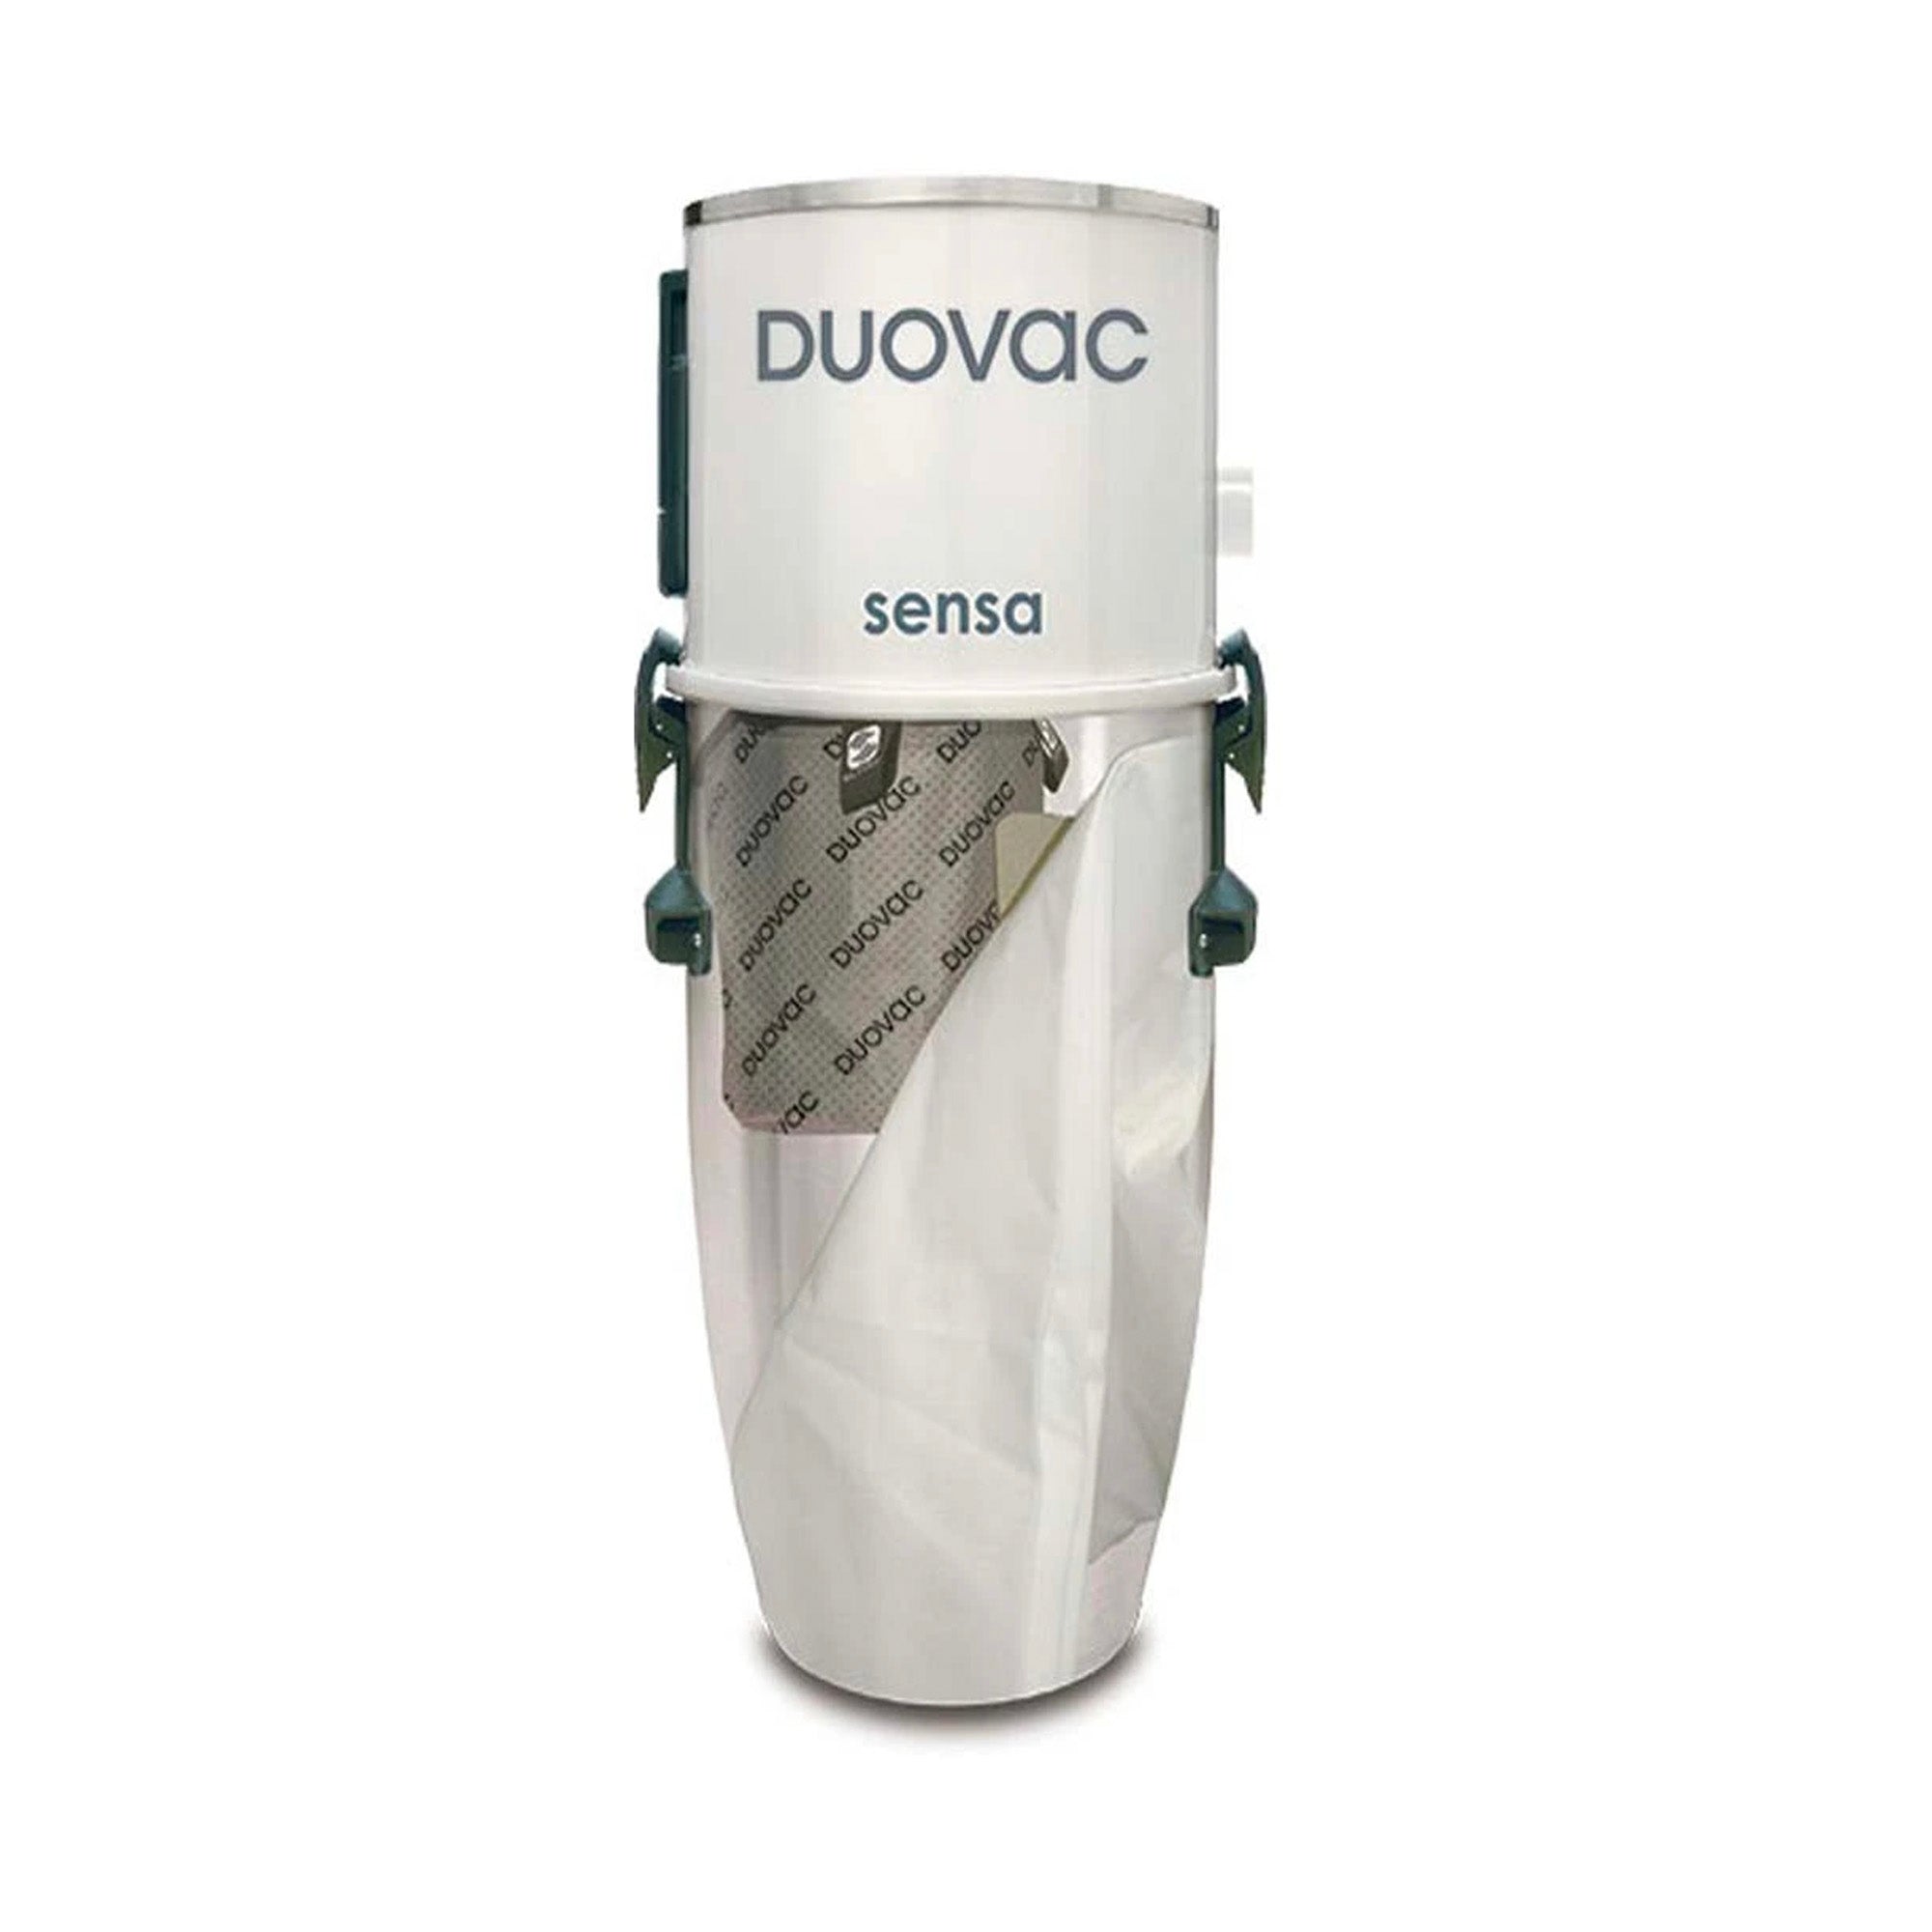 DuoVac Sensa Central Vacuum Power Unit